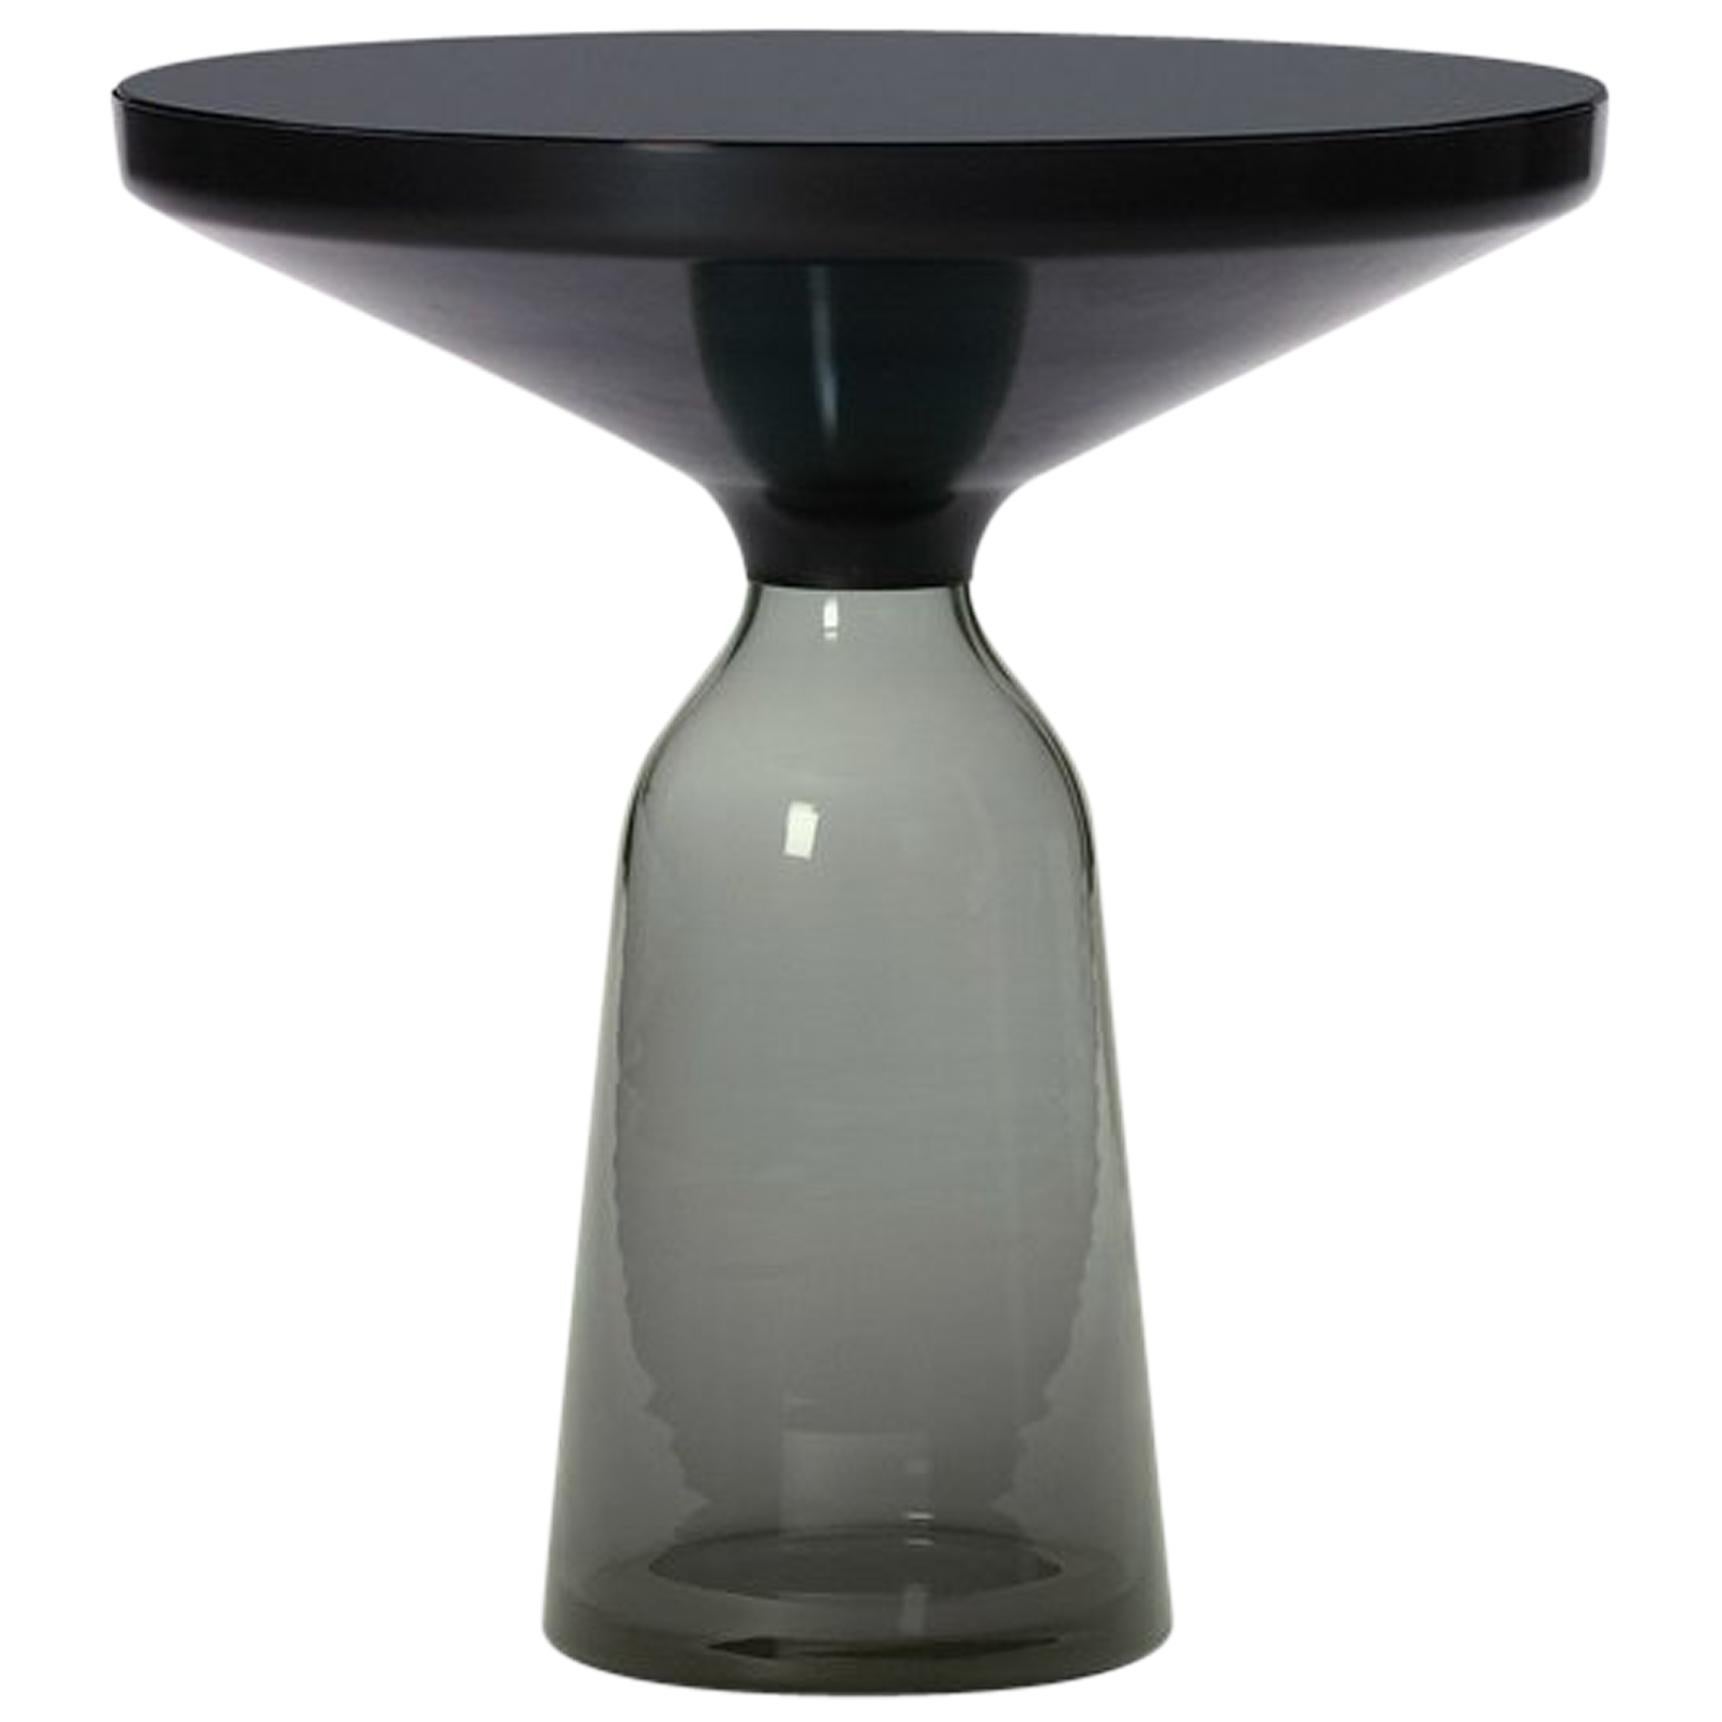 ClassiCon Bell Side Table in Black and Quartz Grey by Sebastian Herkner